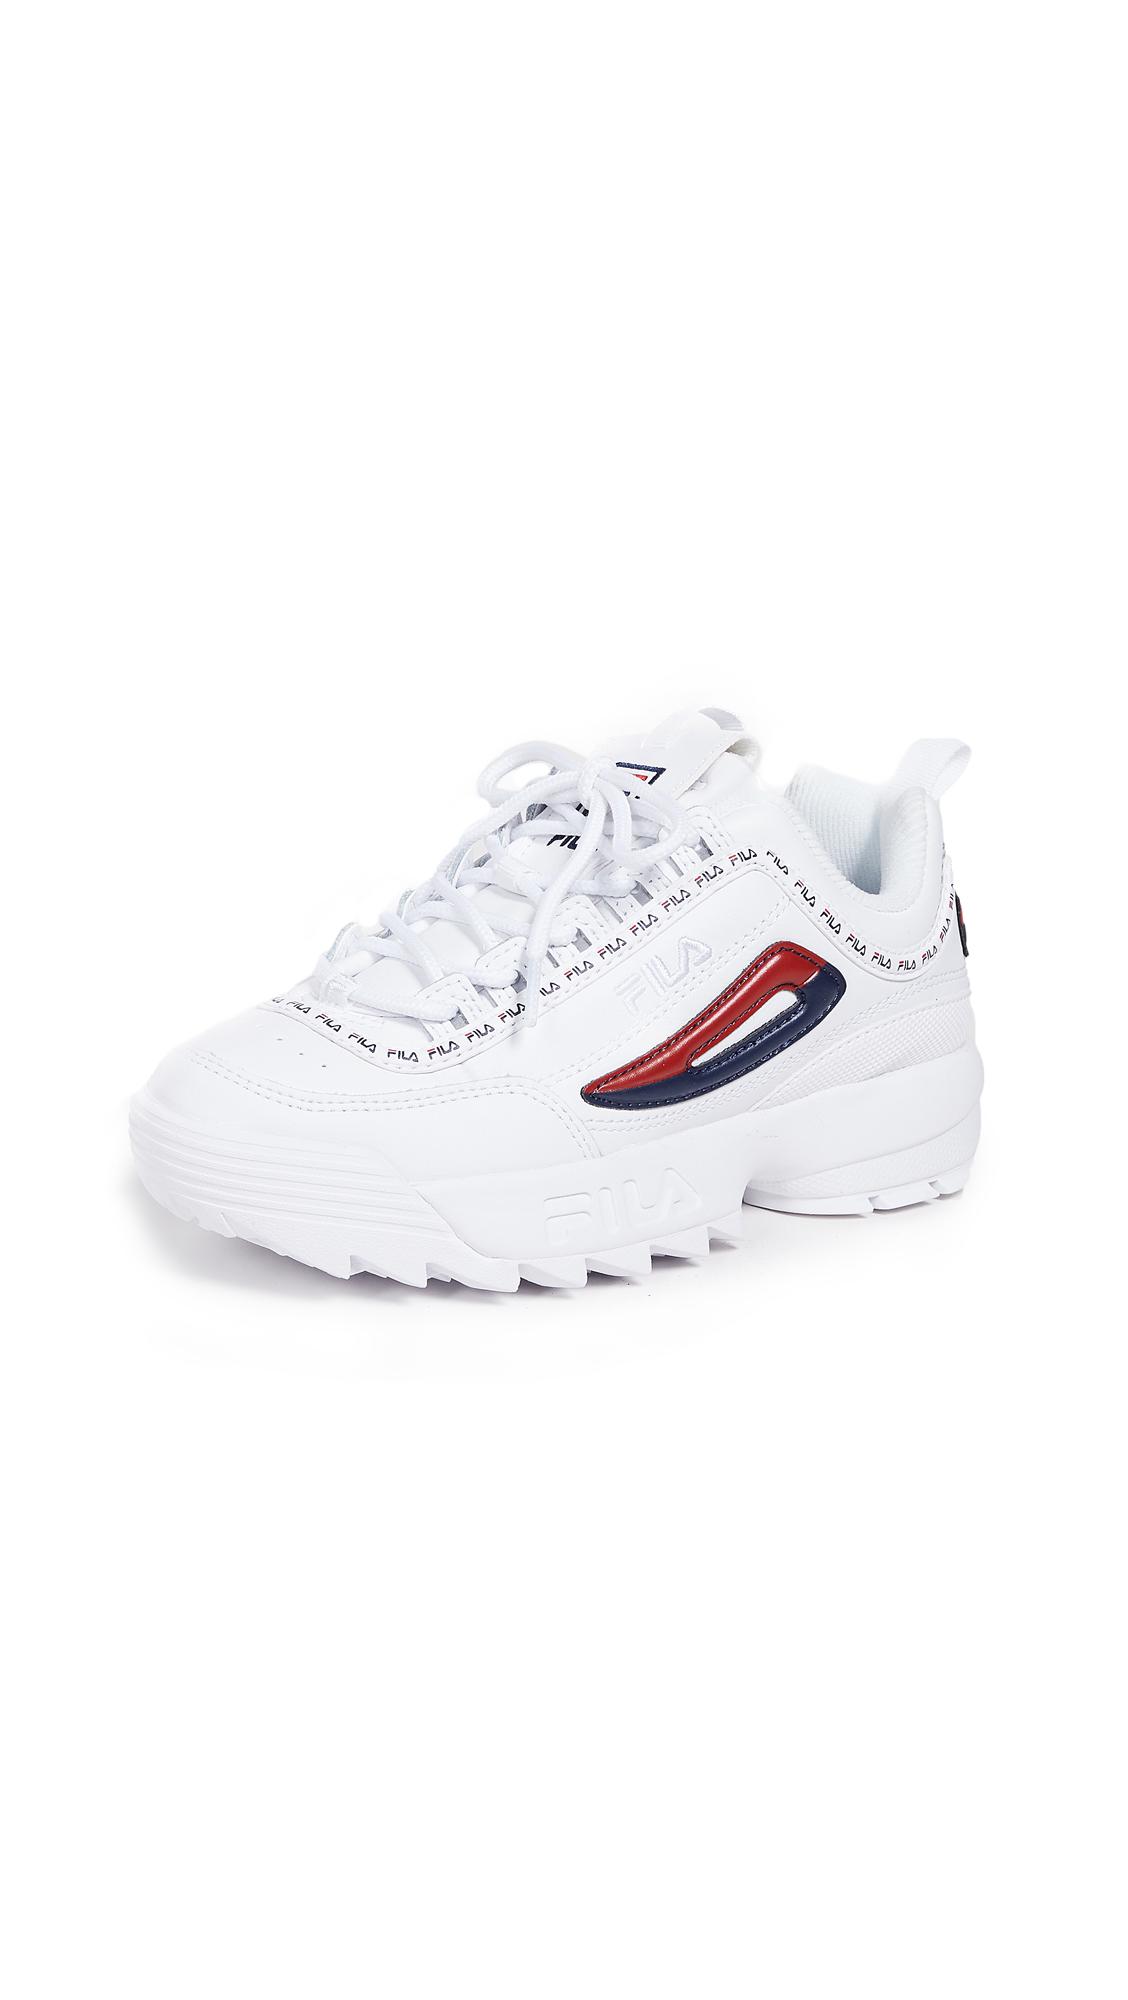 Fila Disruptor Ii Premium Repeat Sneakers In White/ Navy/ Red | ModeSens